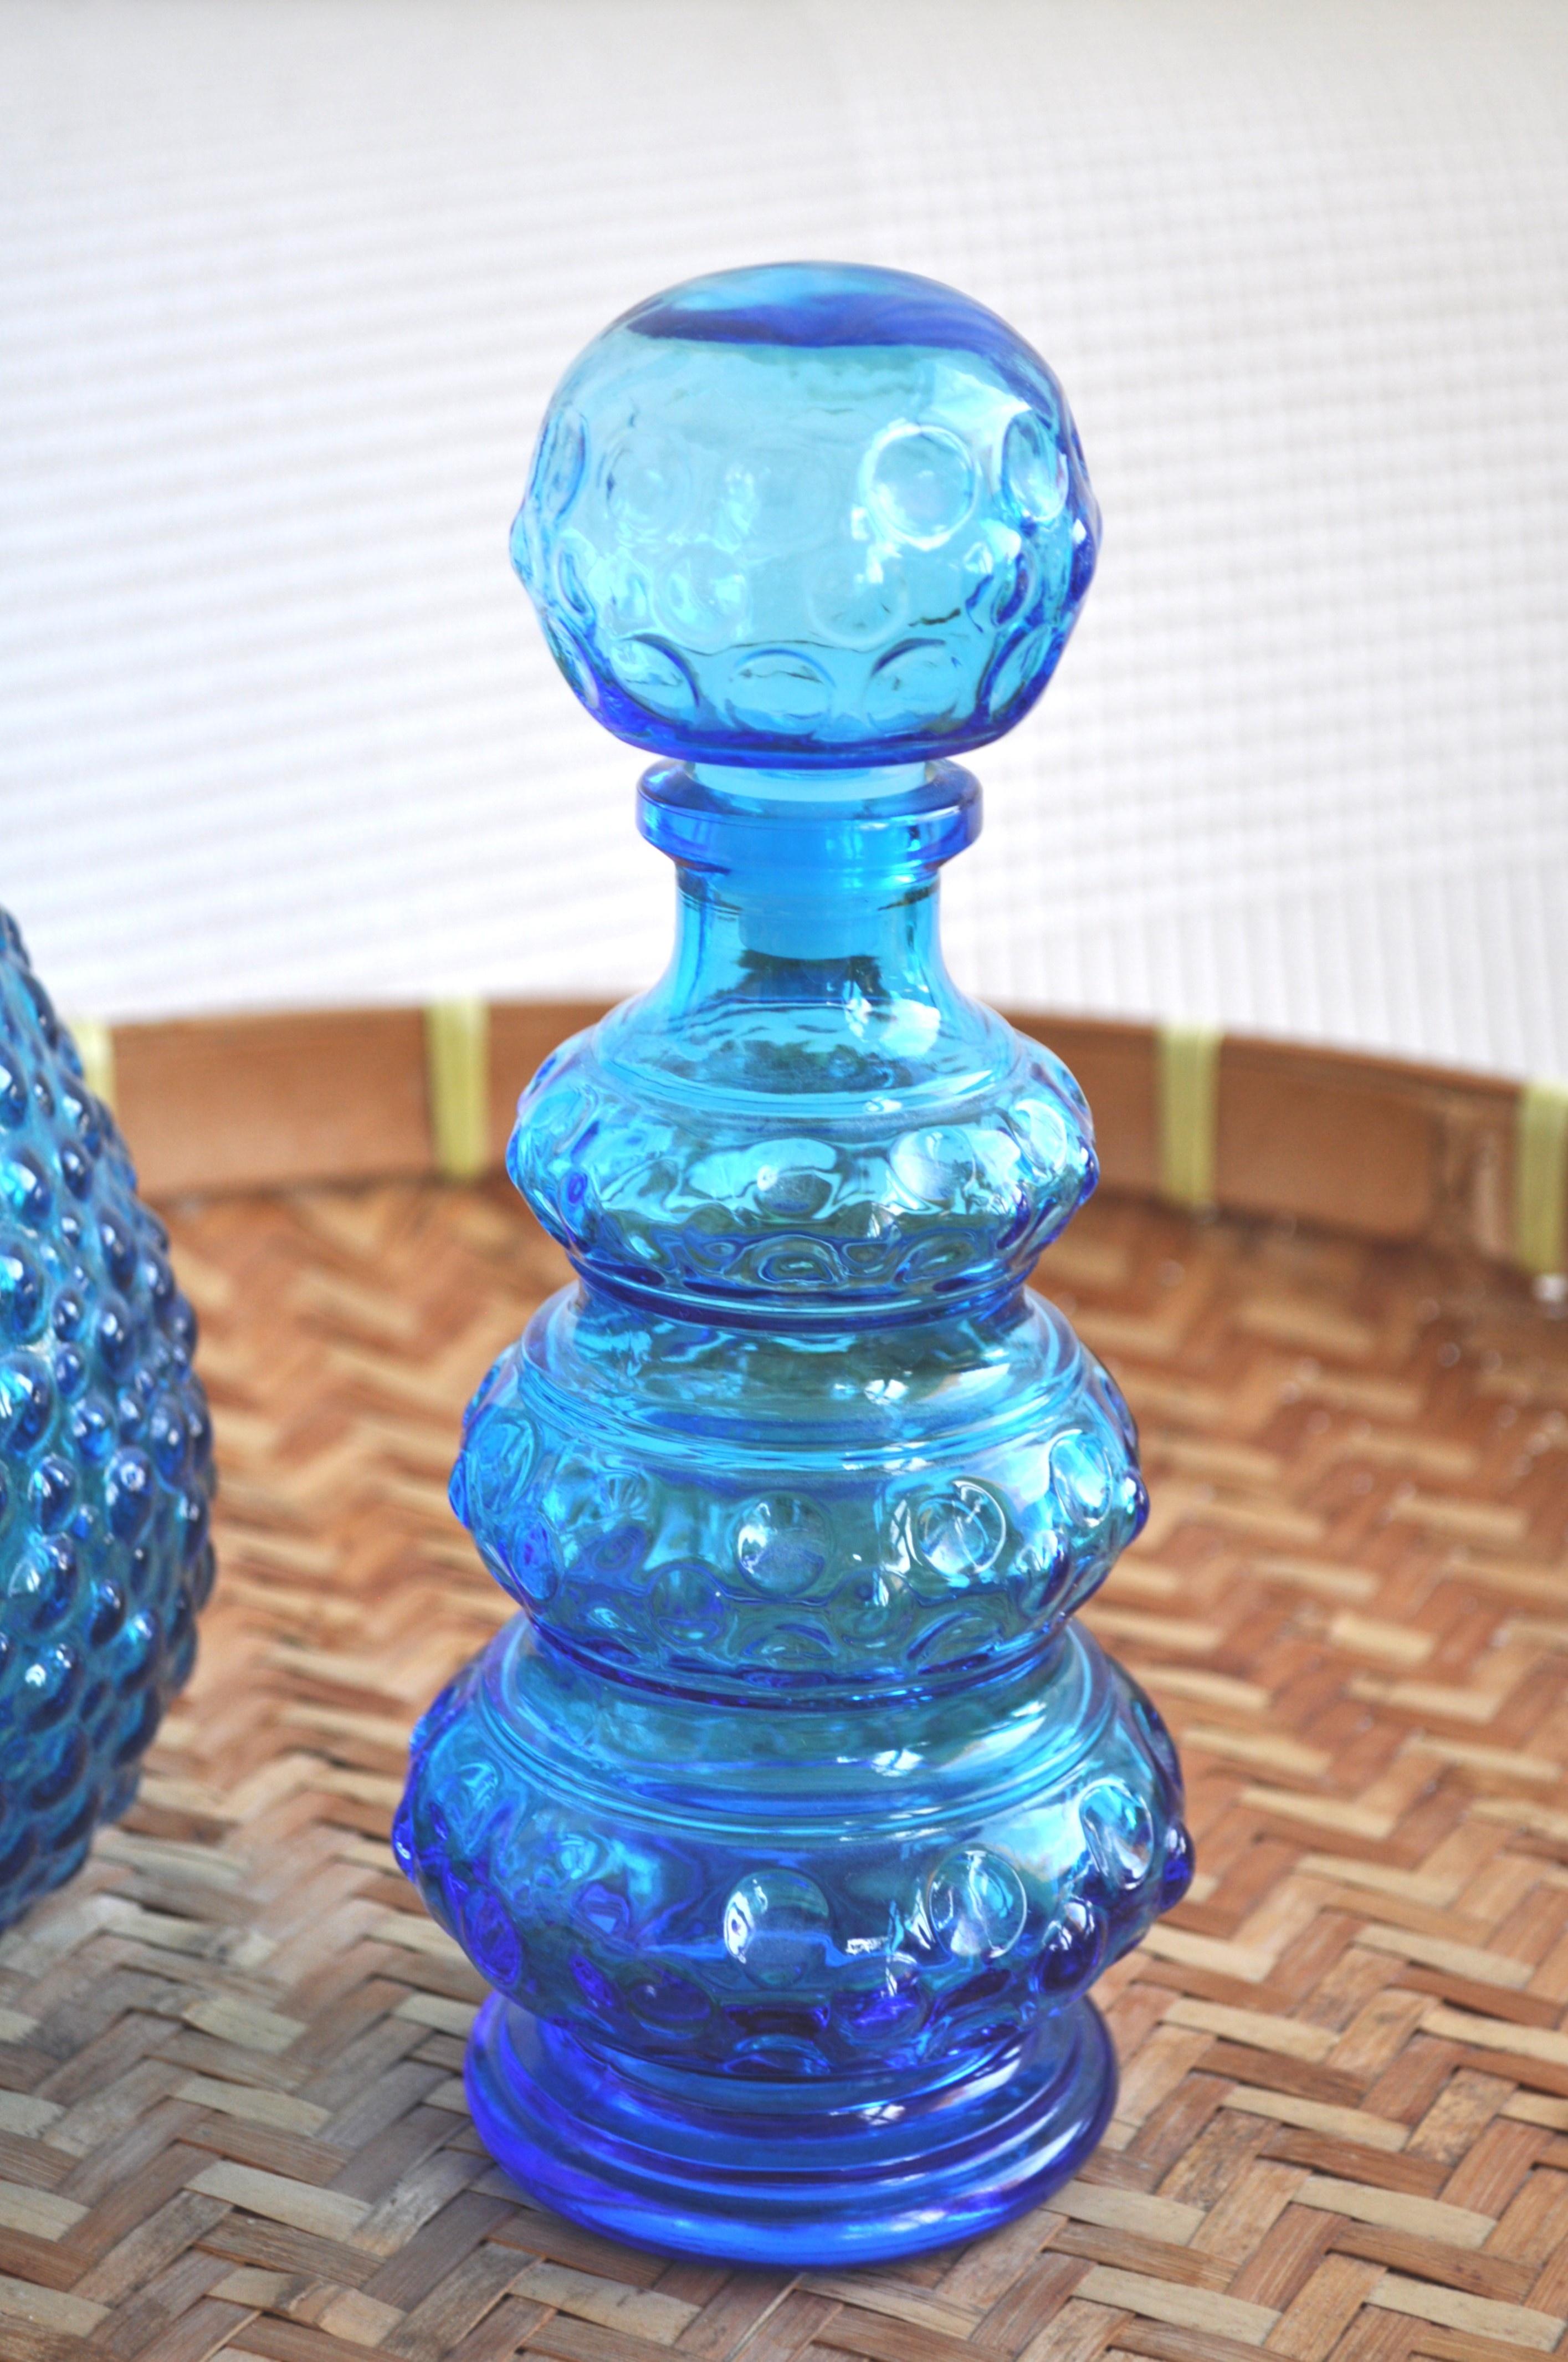 Carafe en verre granité bleu et or vintage - Rêve de Brocante